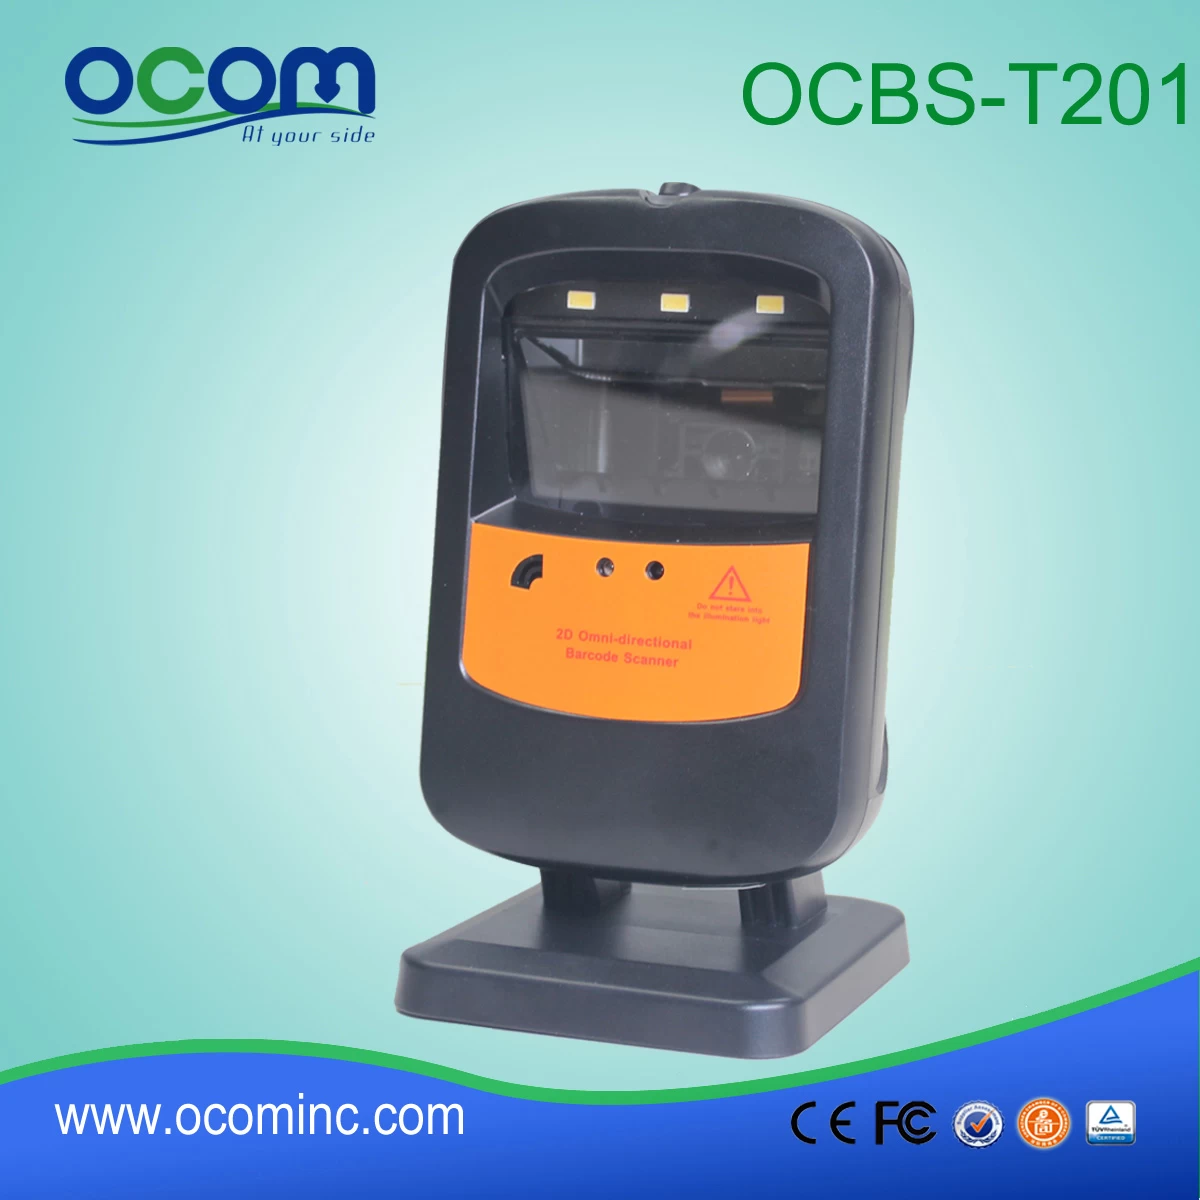 1D & 2D Omni-directional Image Barcode Scanner OCBS-T201